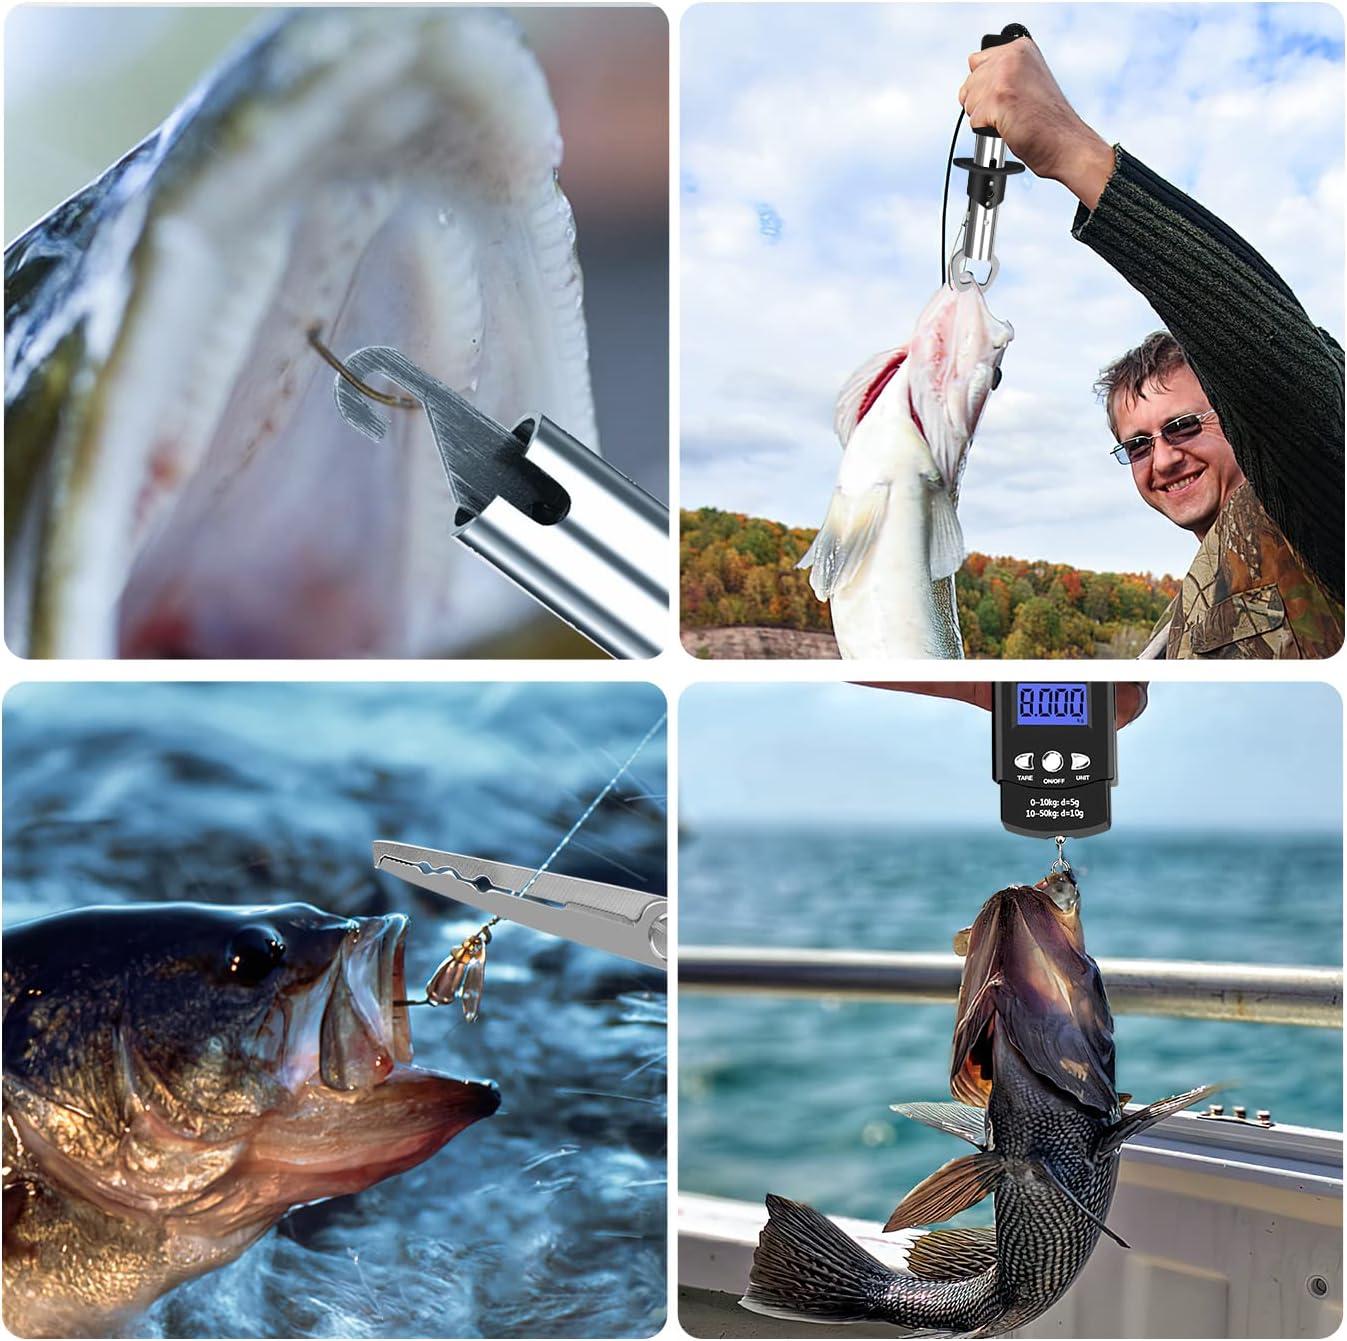 Lybile Fish Hook Remover Tool Aluminum Saltwater Fishing Pliers